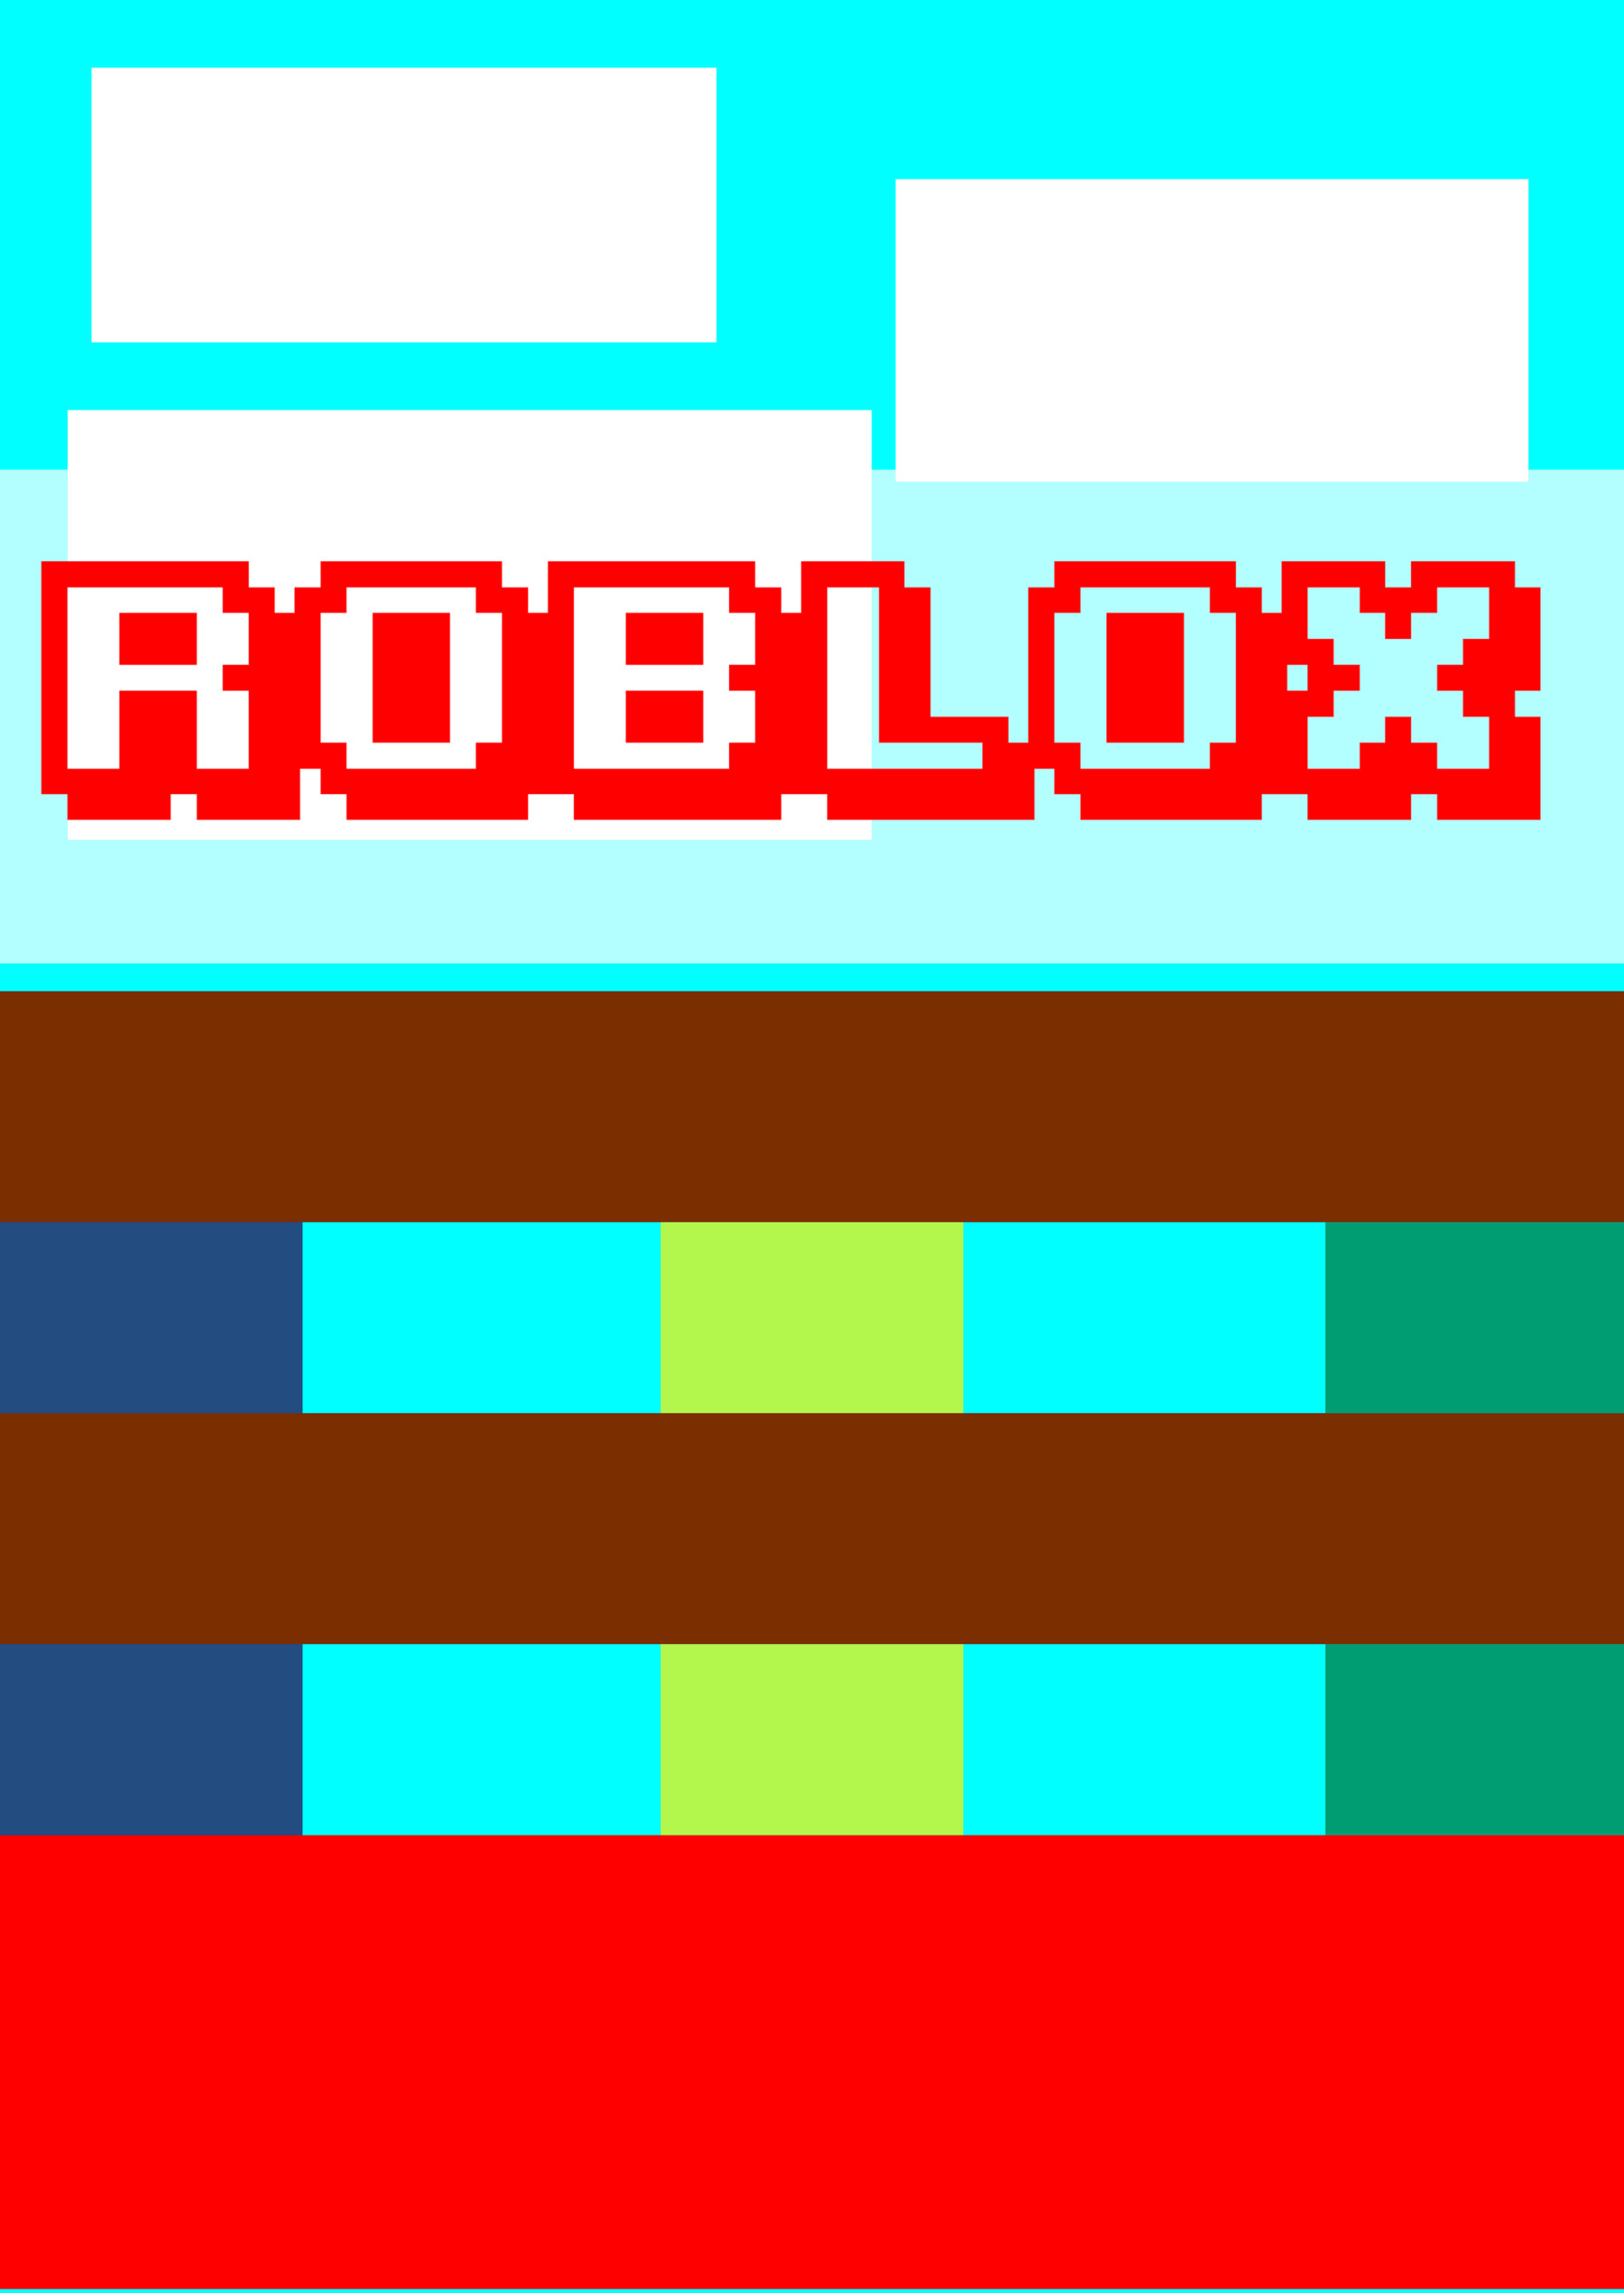 Artstation Roblox Artworks - roblox com p